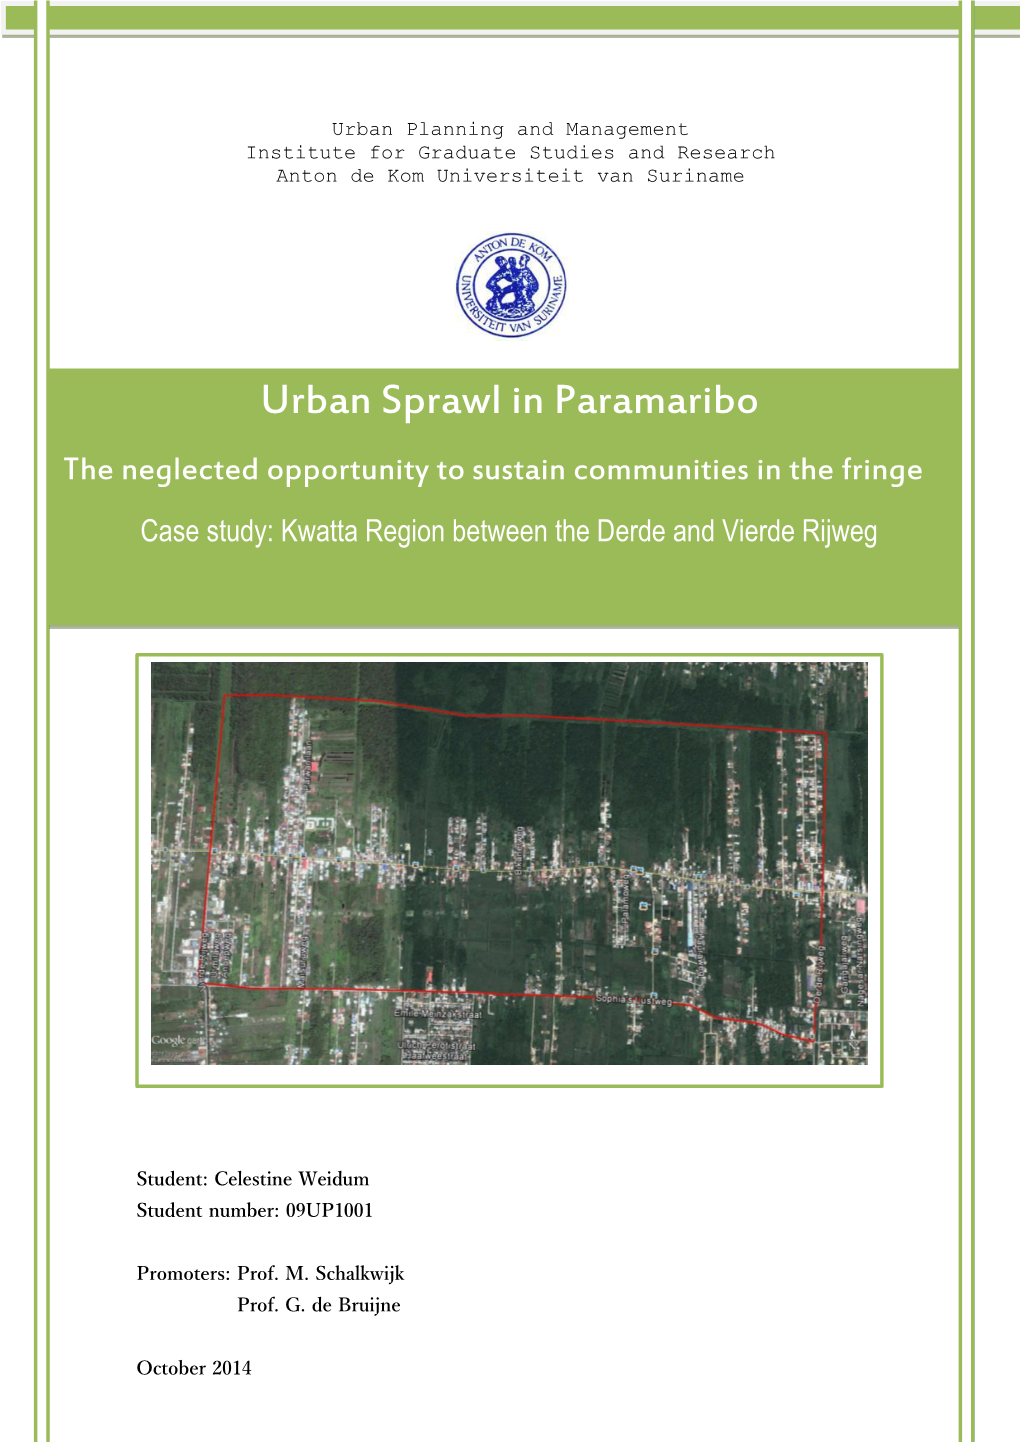 Urban Sprawl in the Fringe of Paramaribo